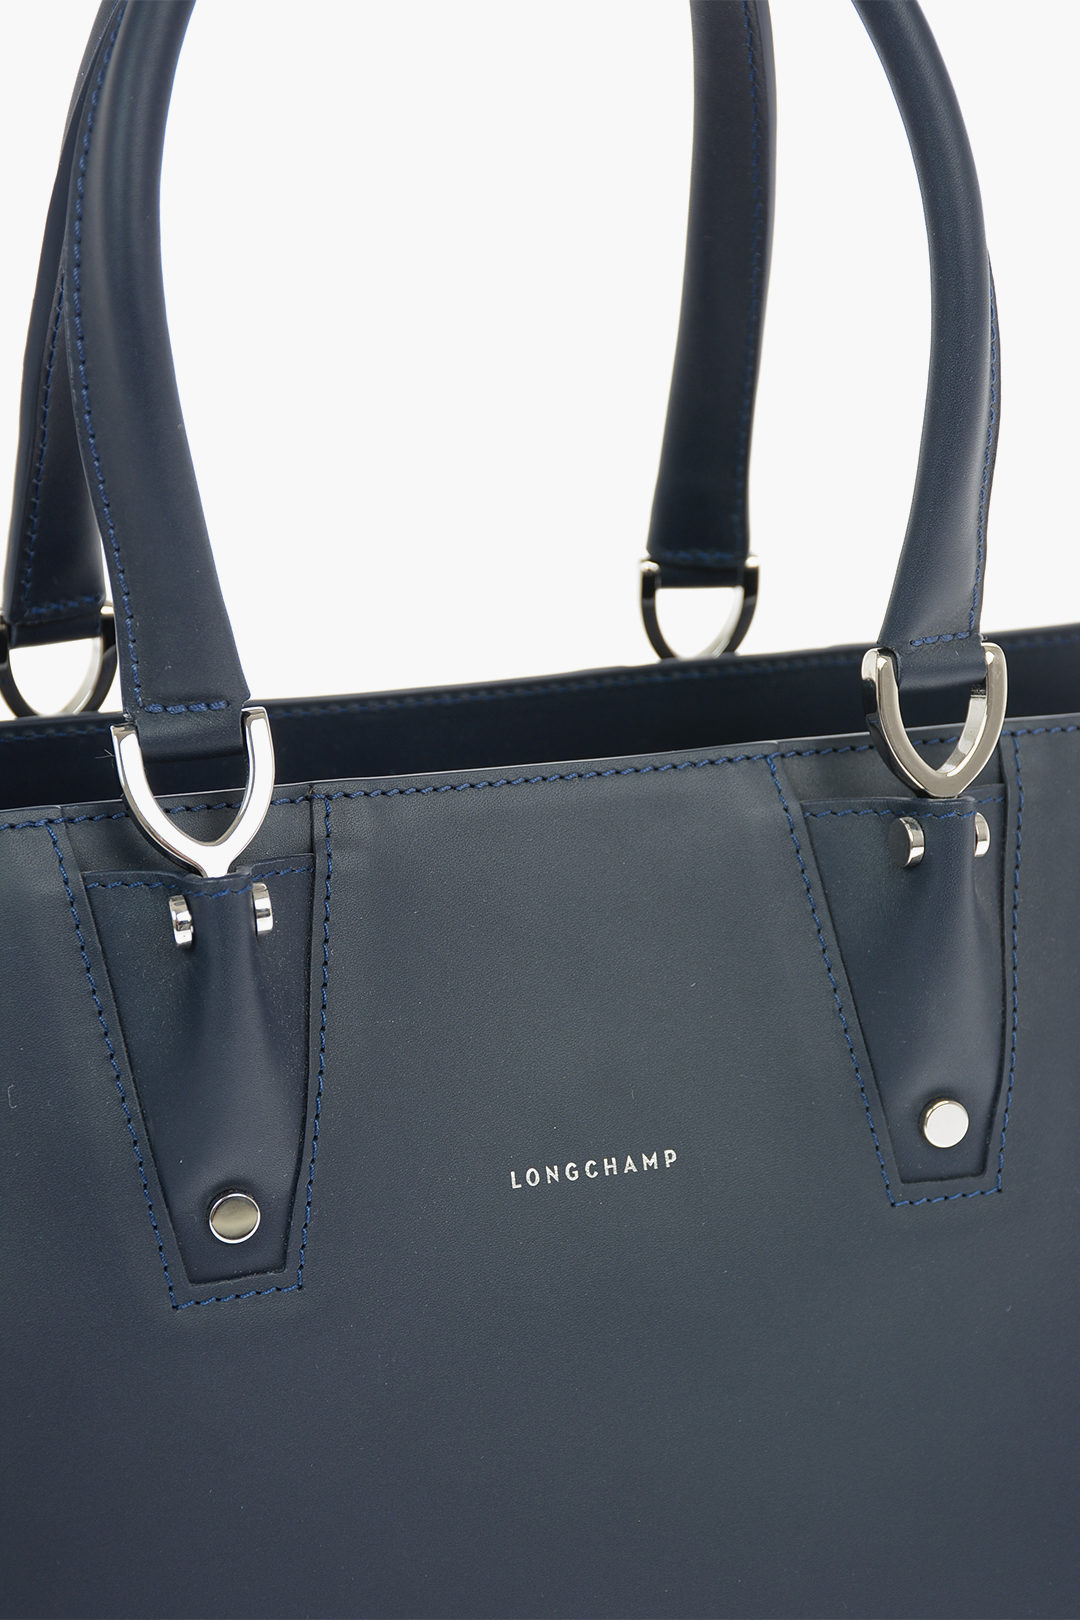 Longchamp Handbags & Purses for Women